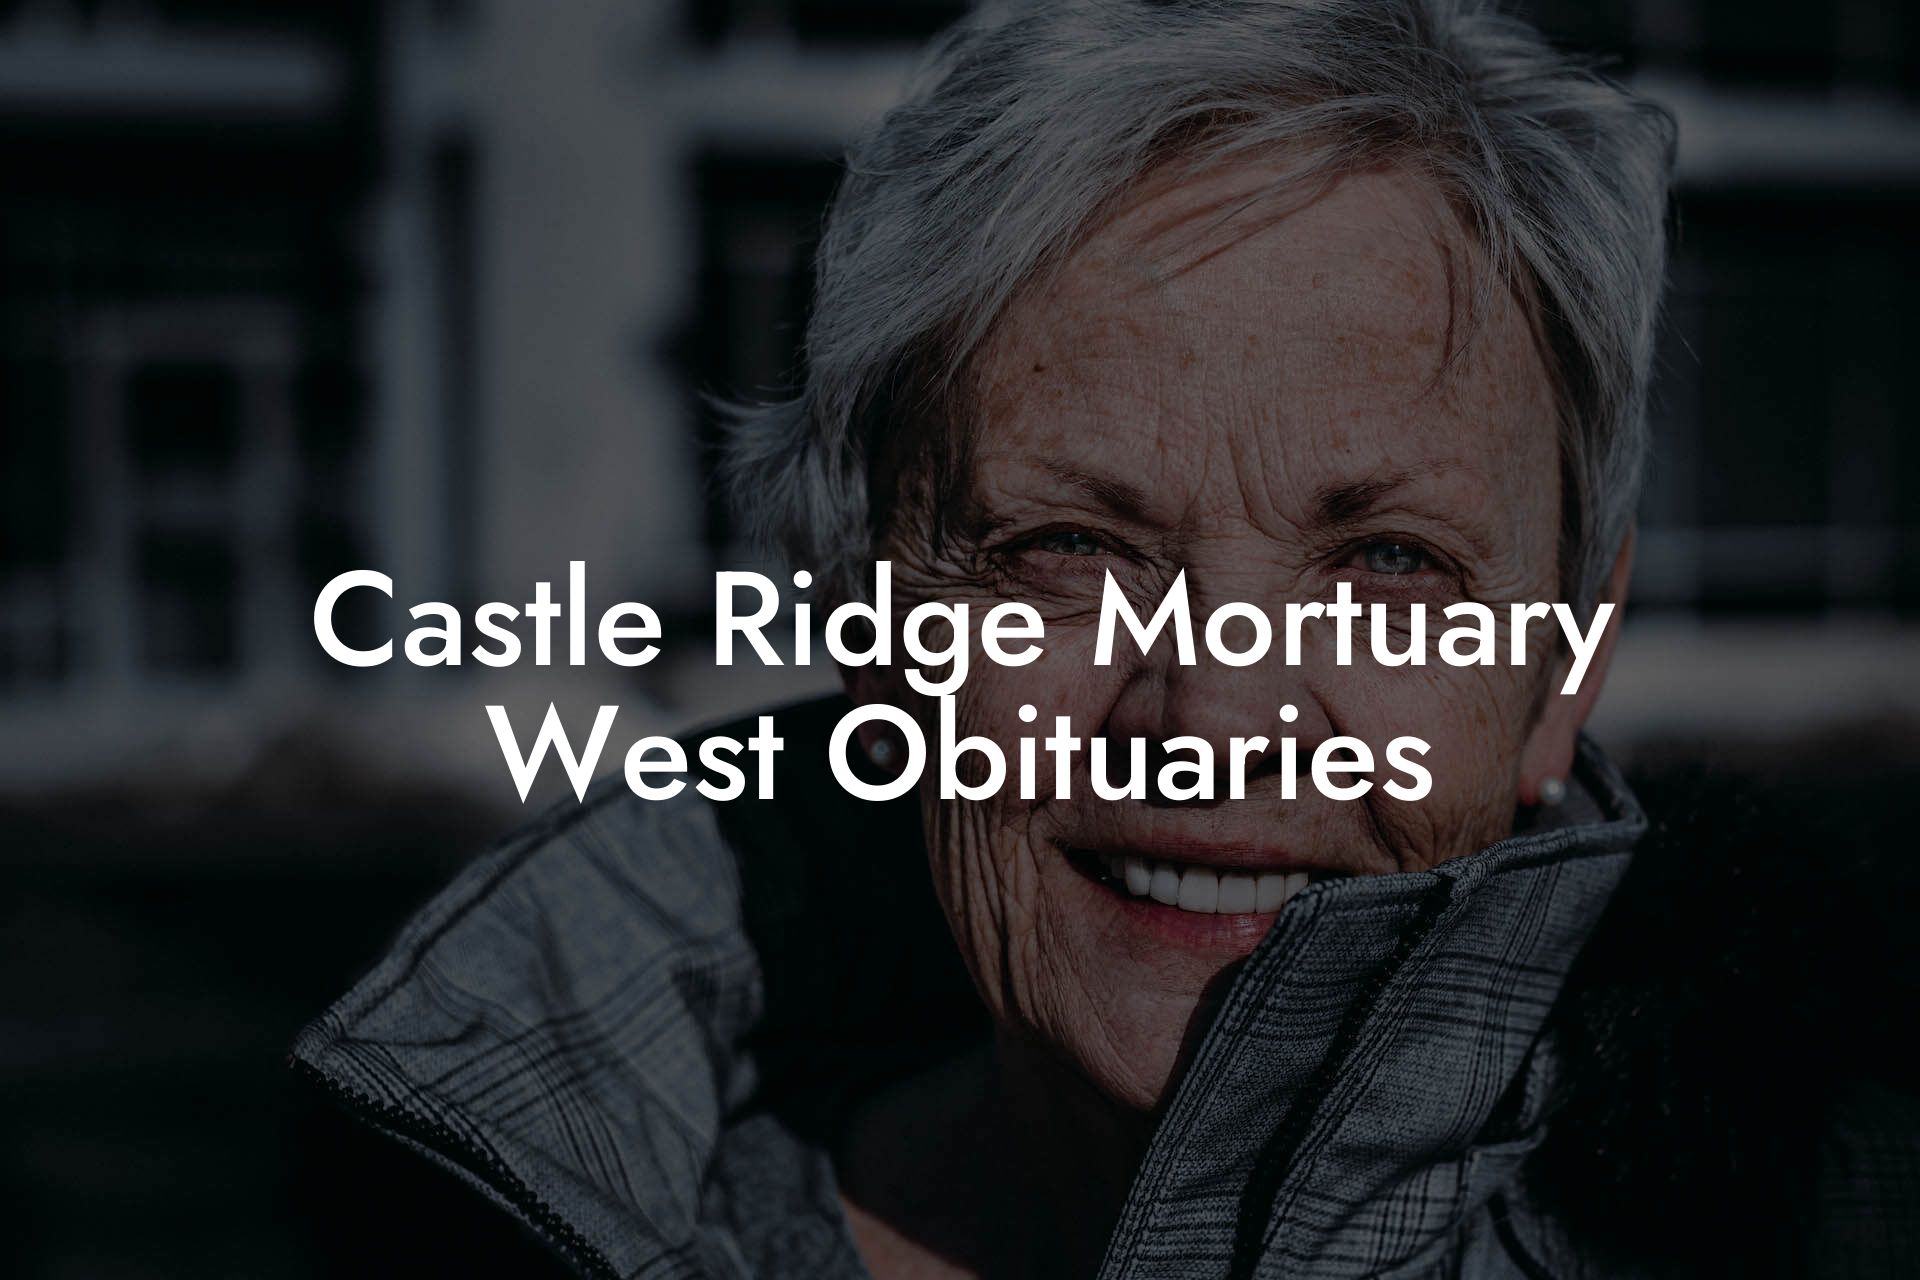 Castle Ridge Mortuary West Obituaries